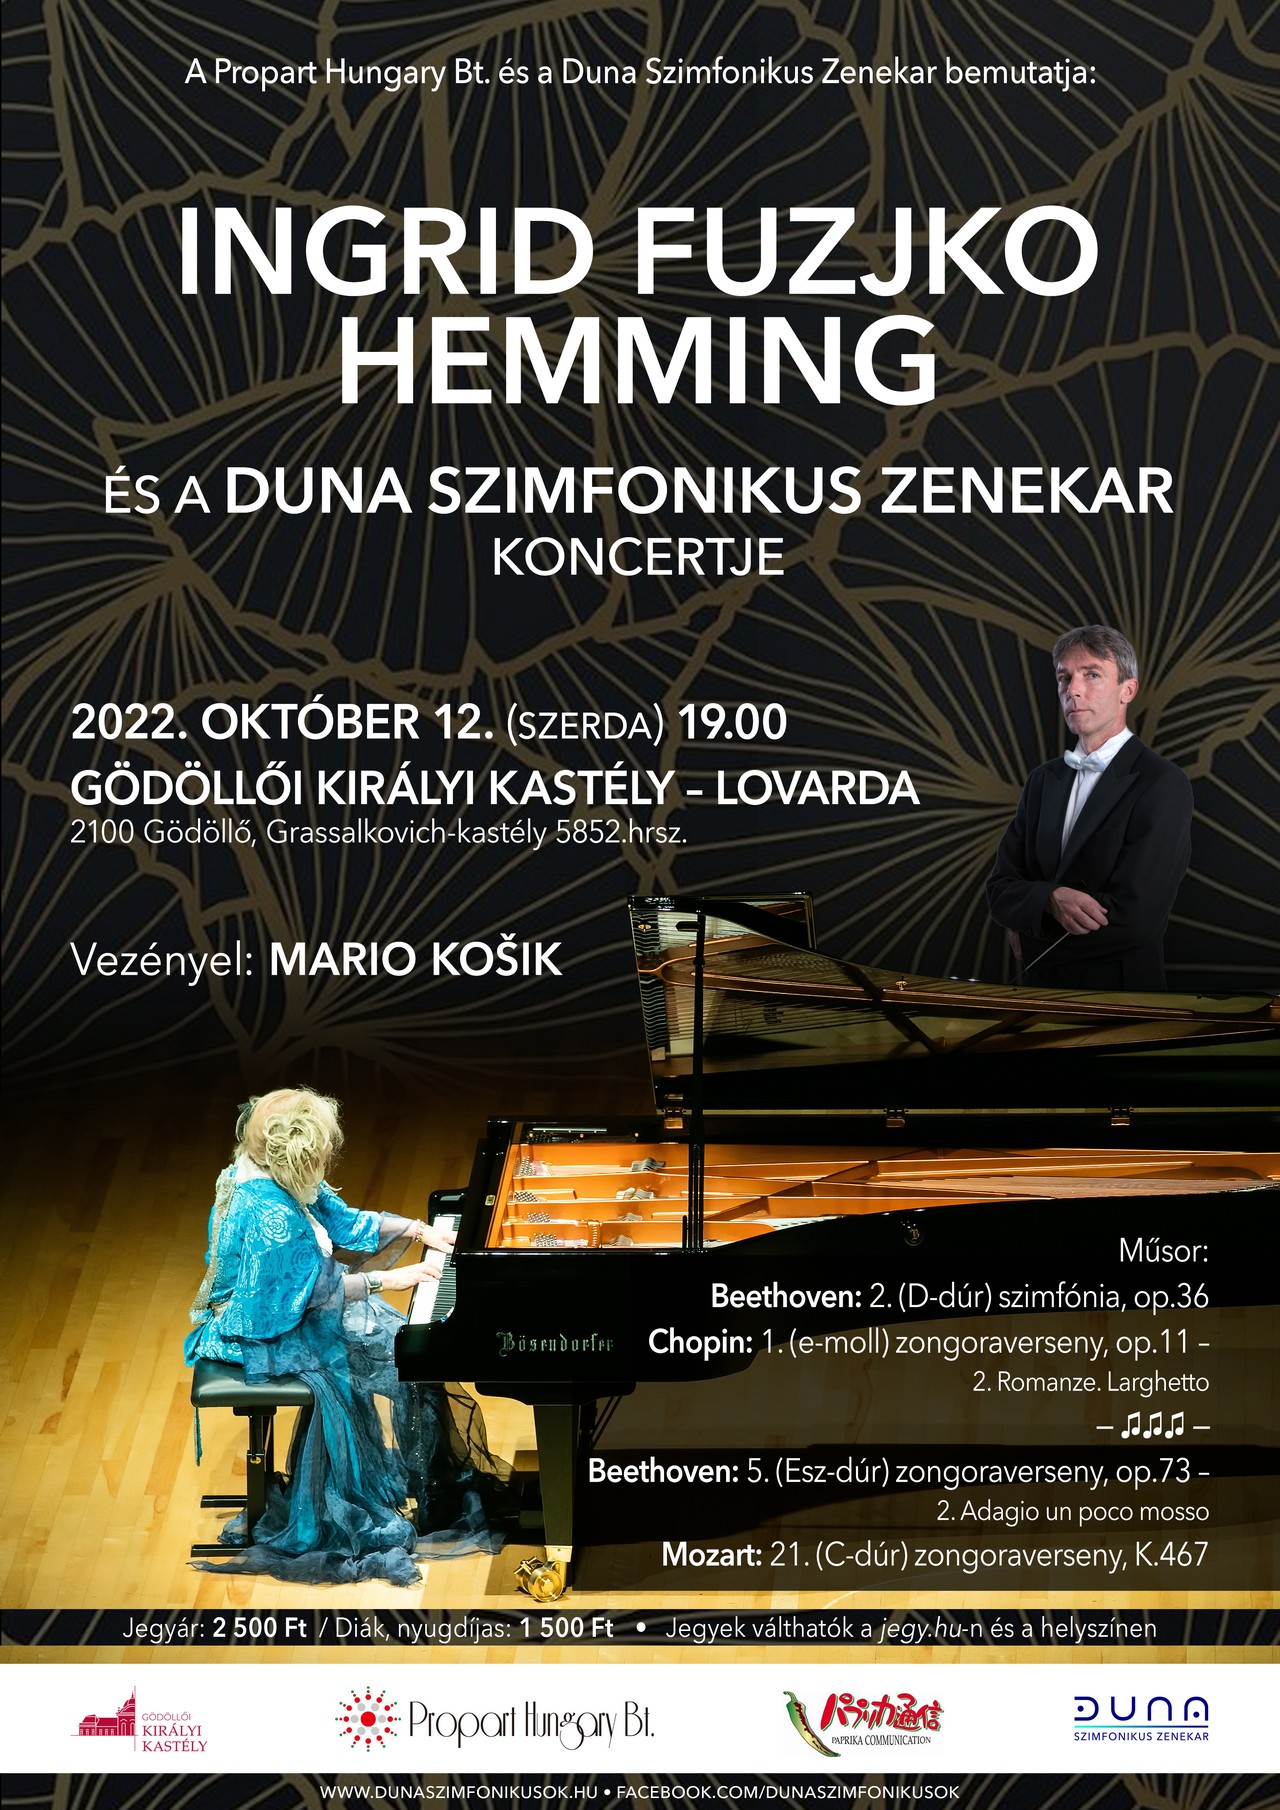 Ingrid Fuzjko Hemming és a Duna Szimfonikus Zenekar koncertje kép